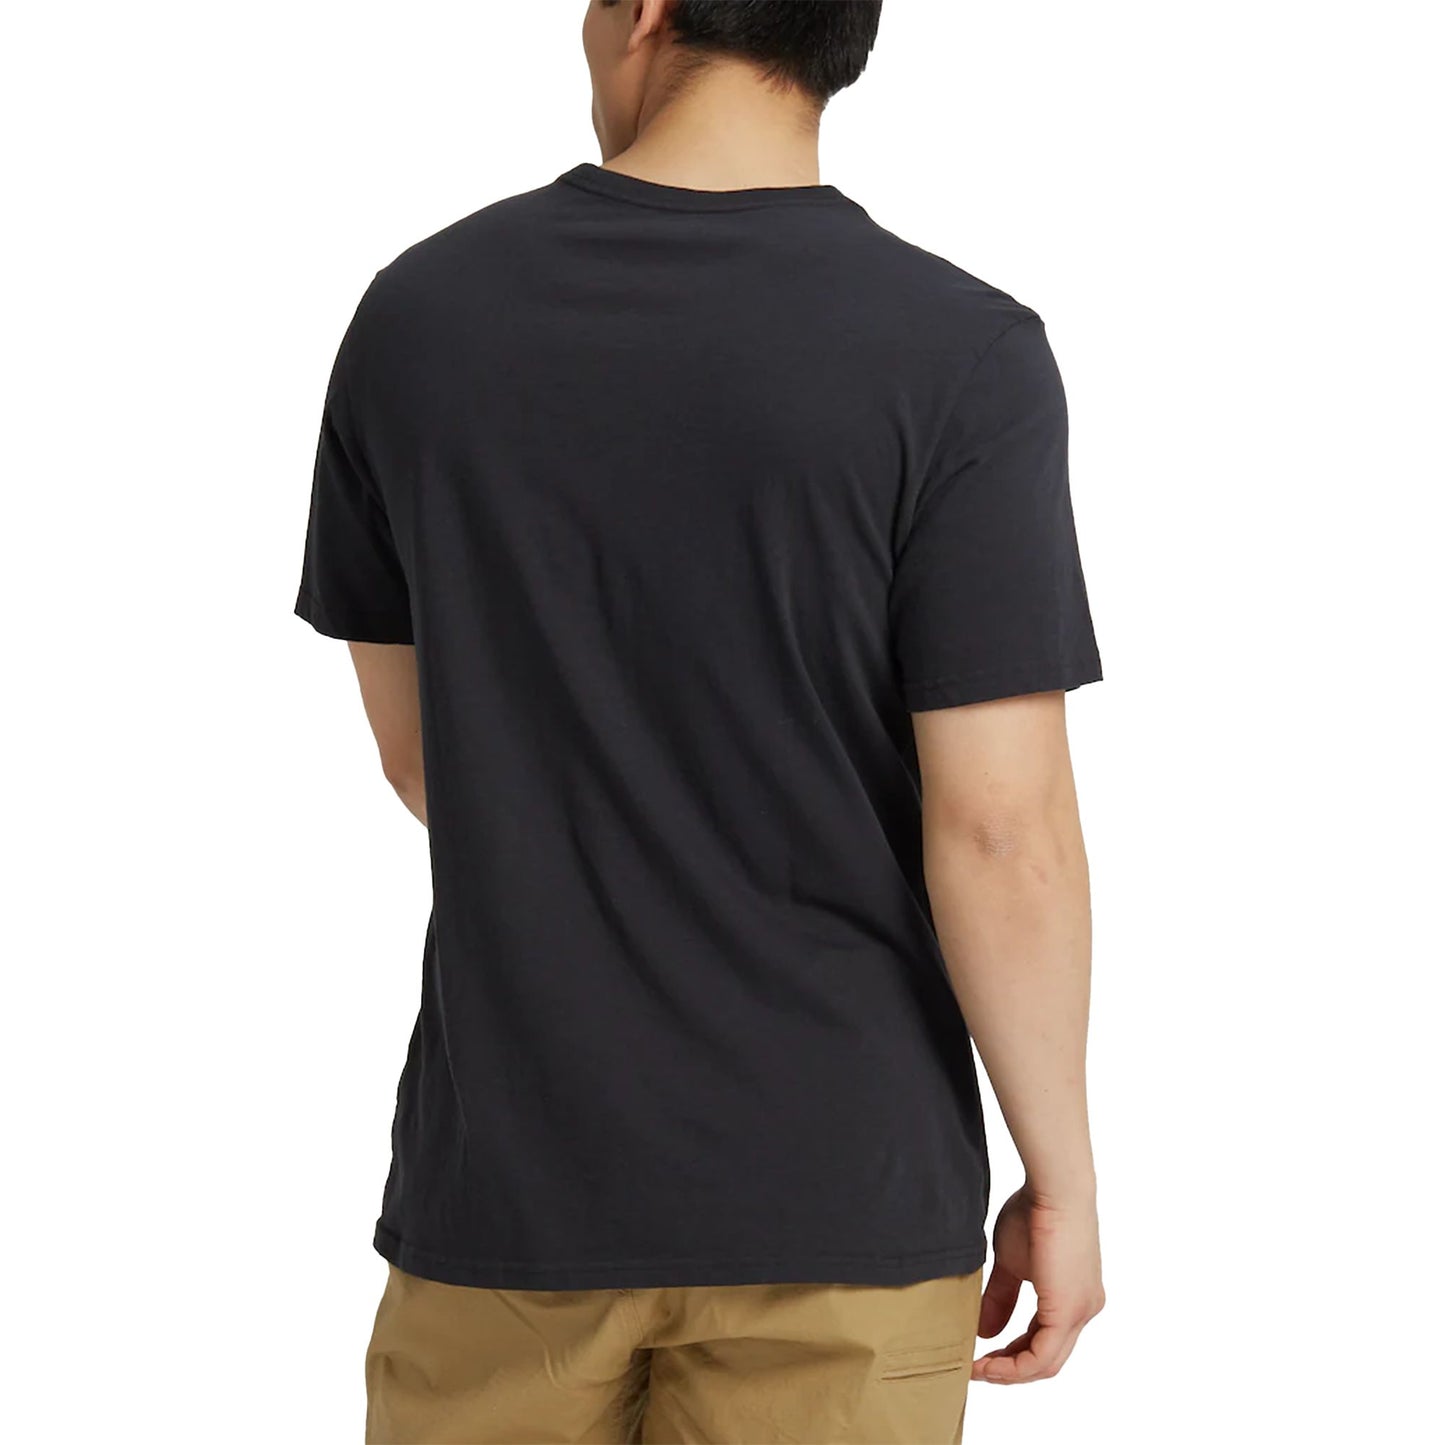 Burton Durable Goods Short Sleeve T-Shirt True Black SS Shirts